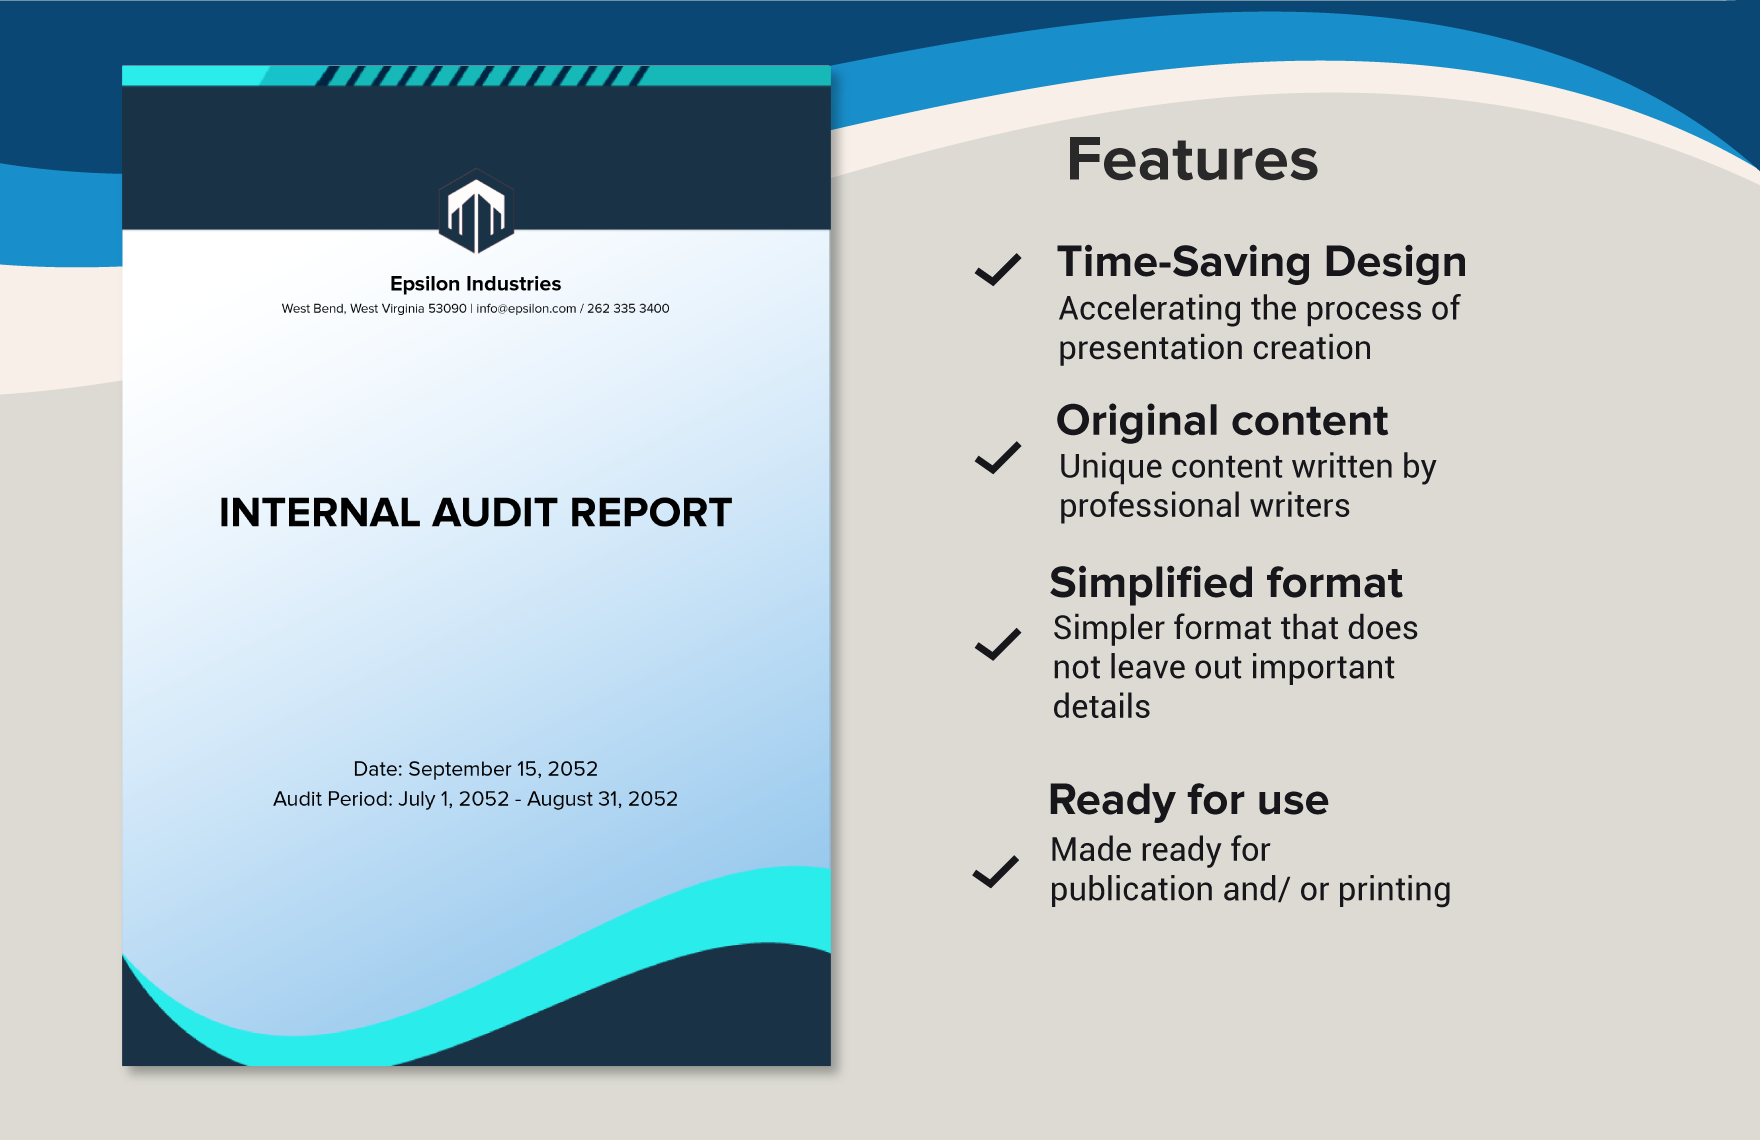 Internal Audit Report Writing Template